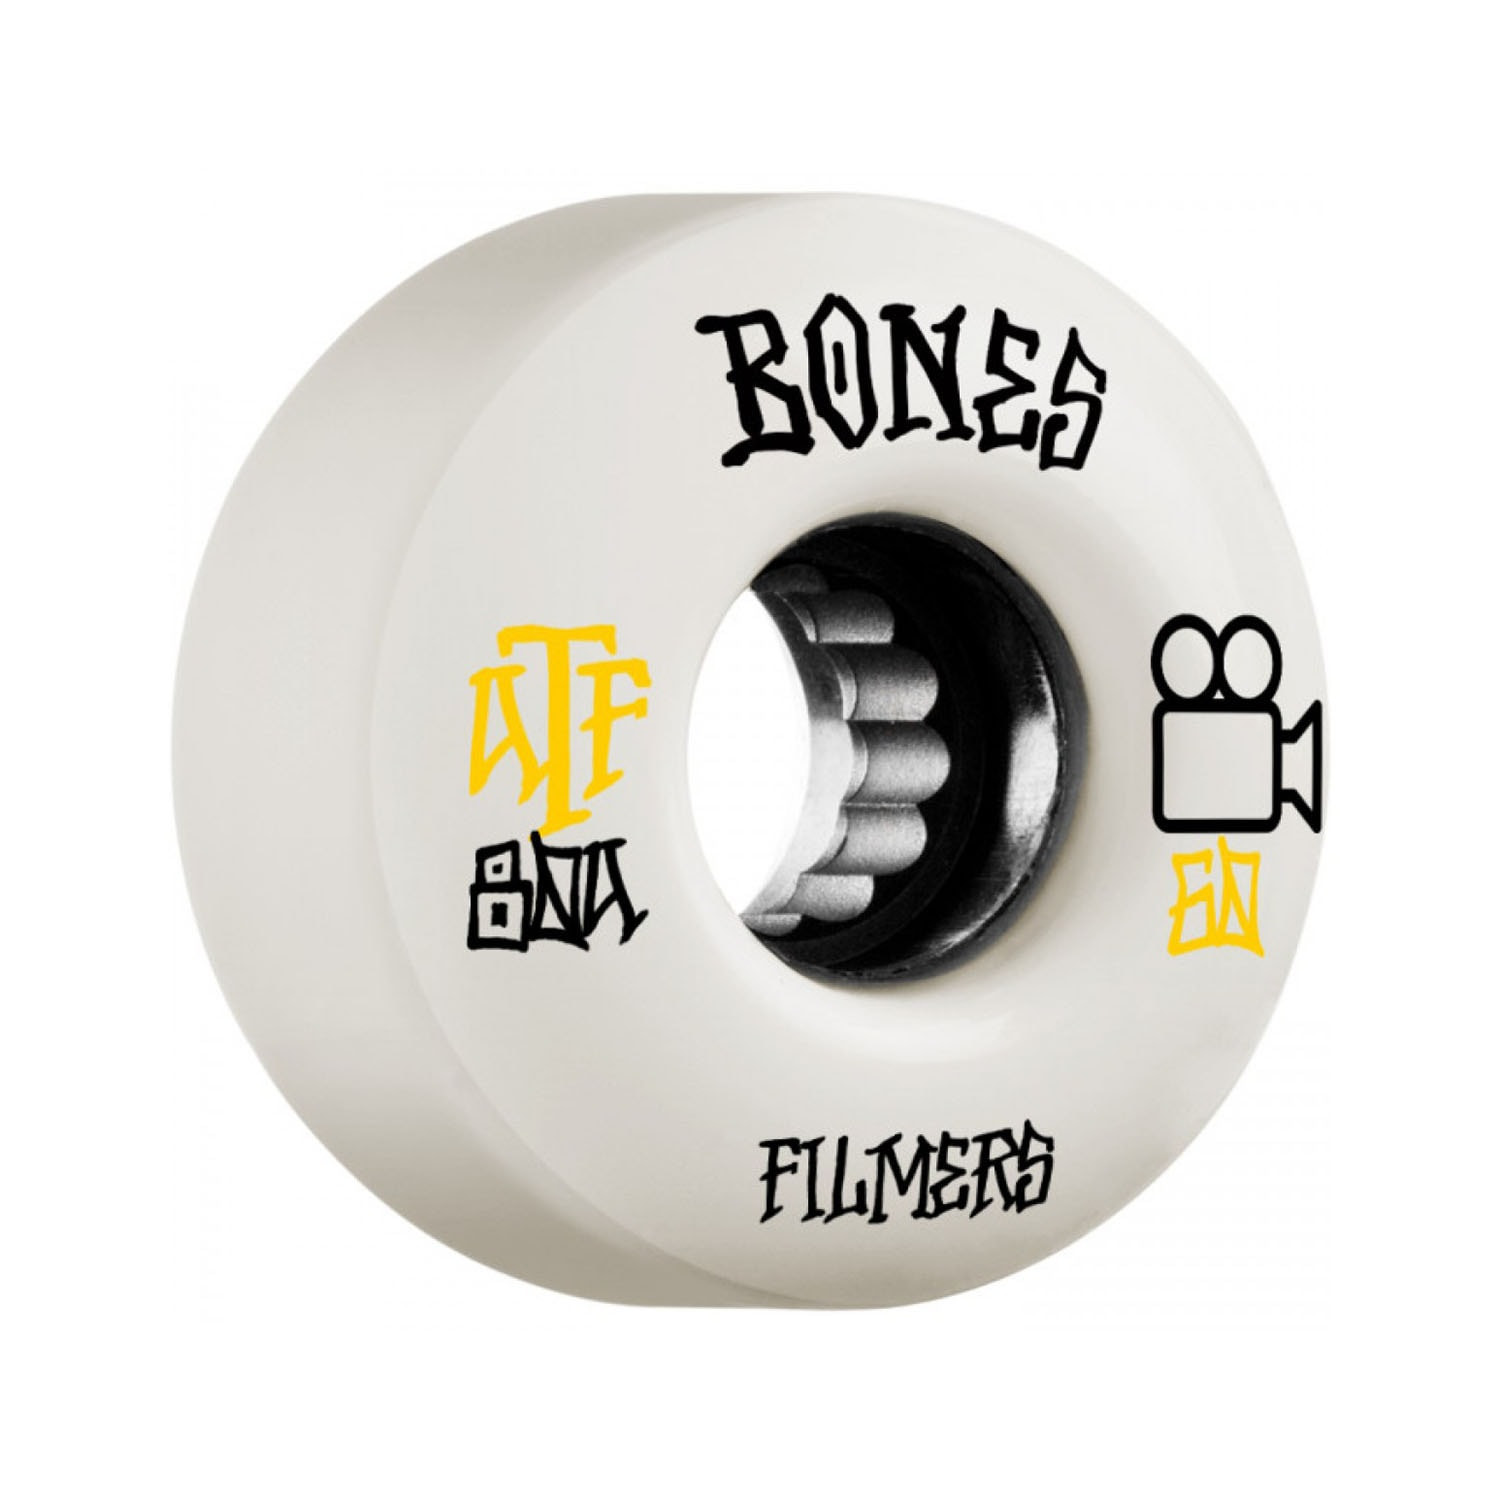 Bones Filmers Atf 60Mm/80A